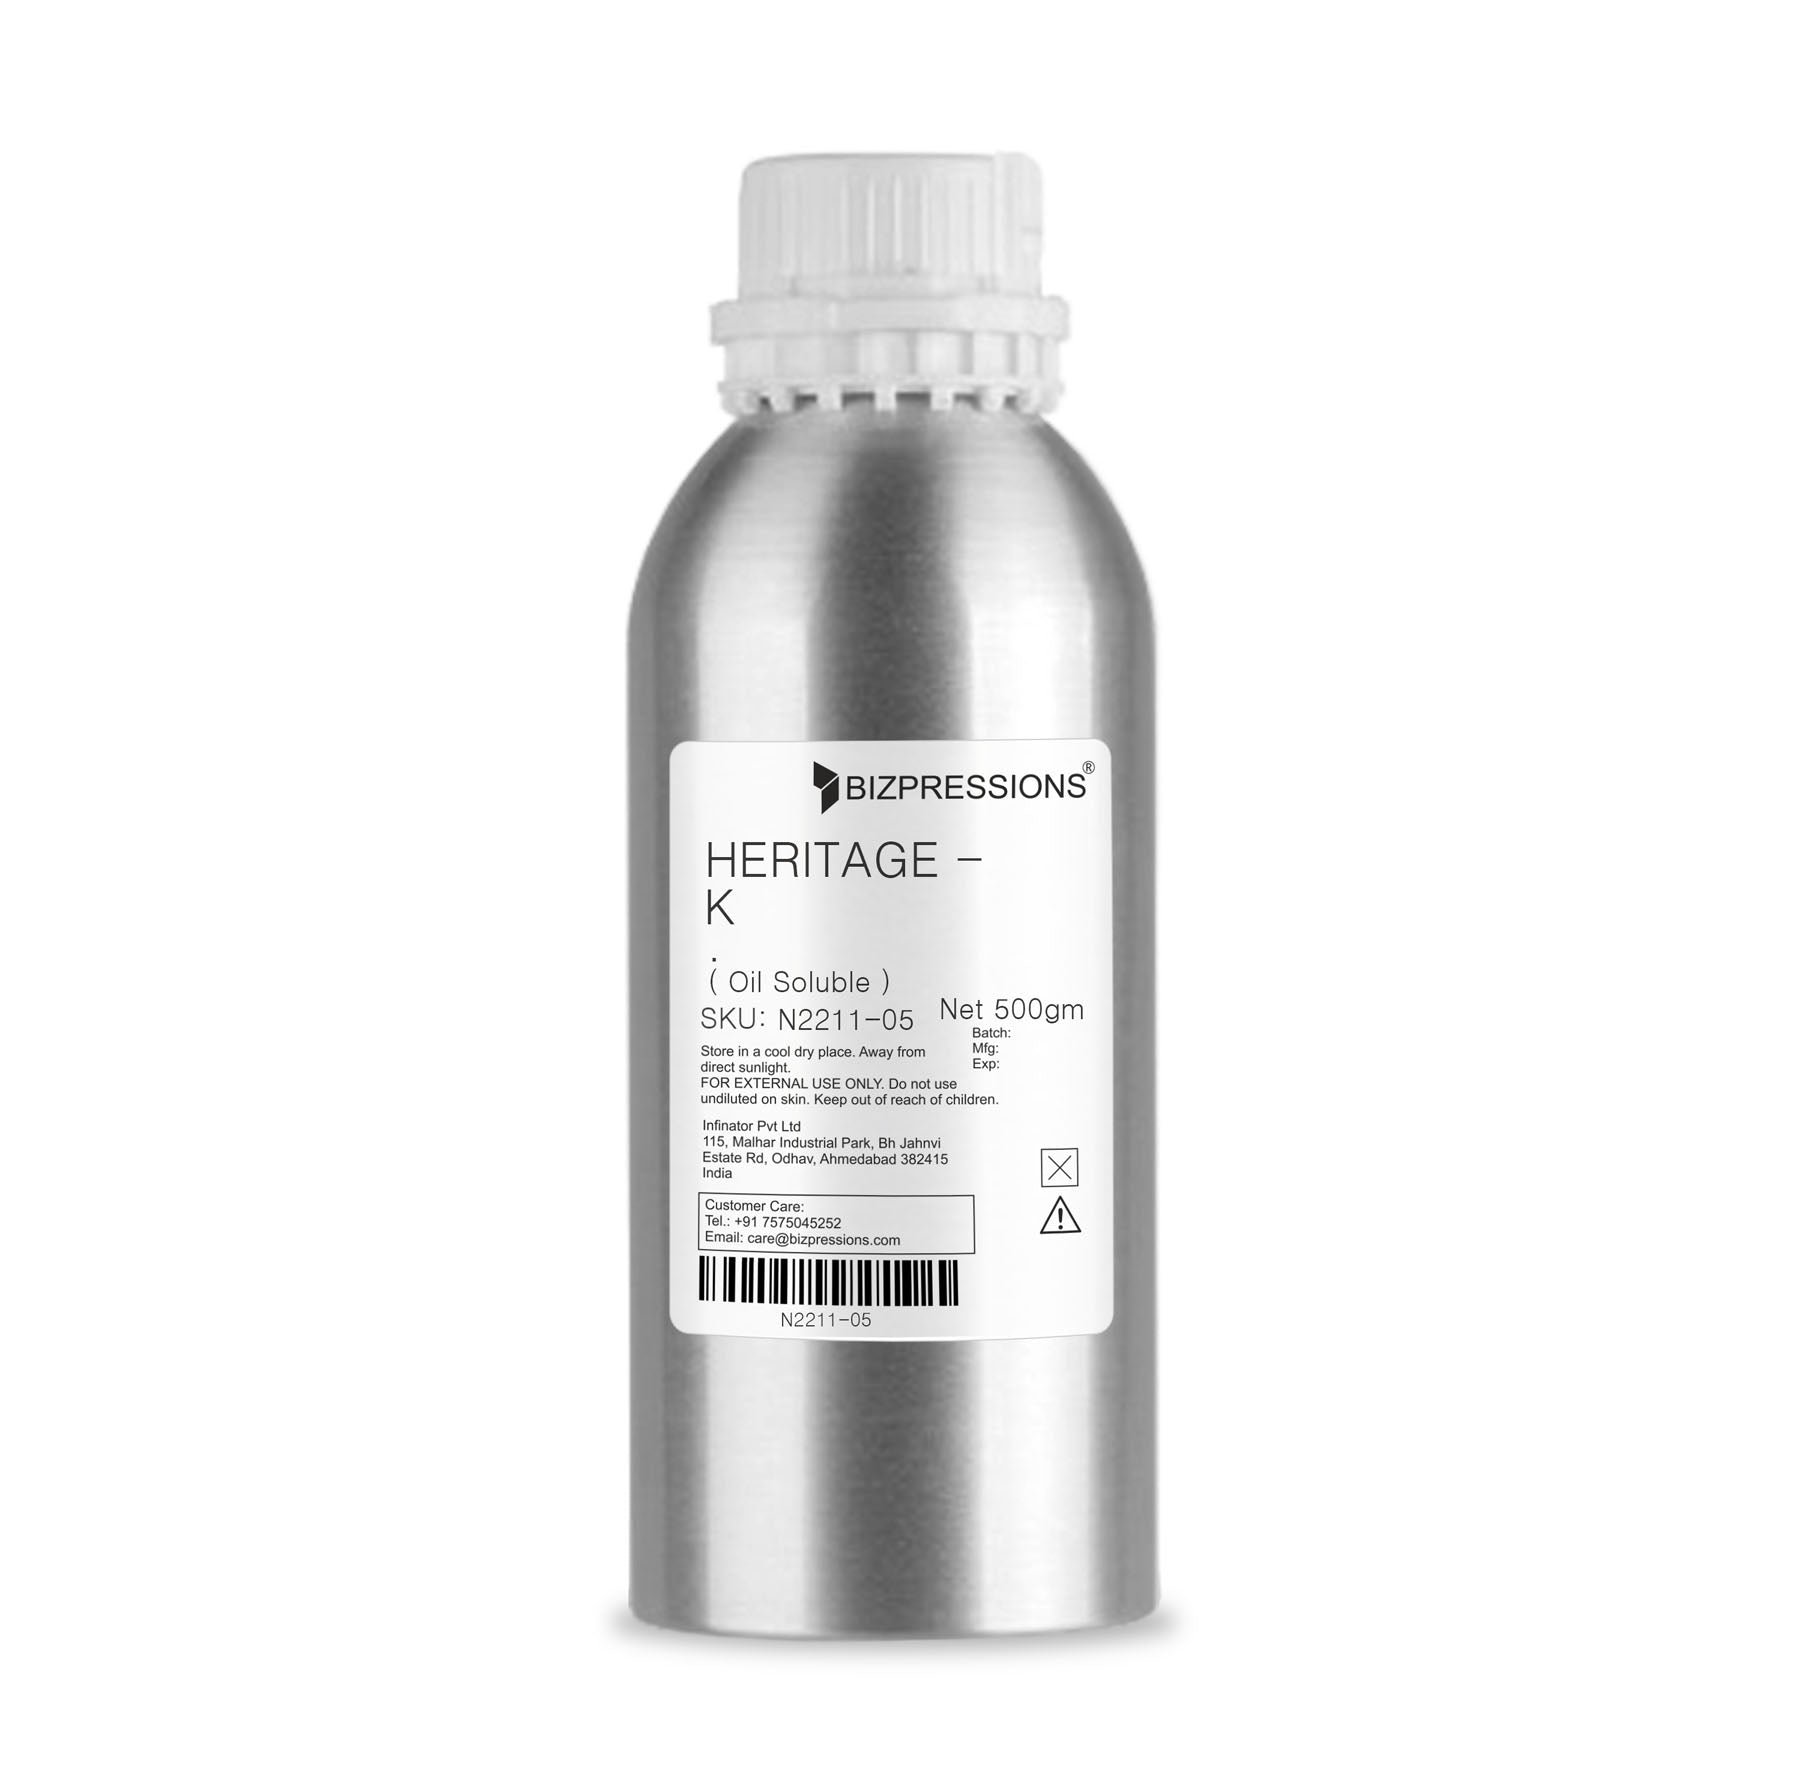 HERITAGE - K - Fragrance ( Oil Soluble ) - 500 gm